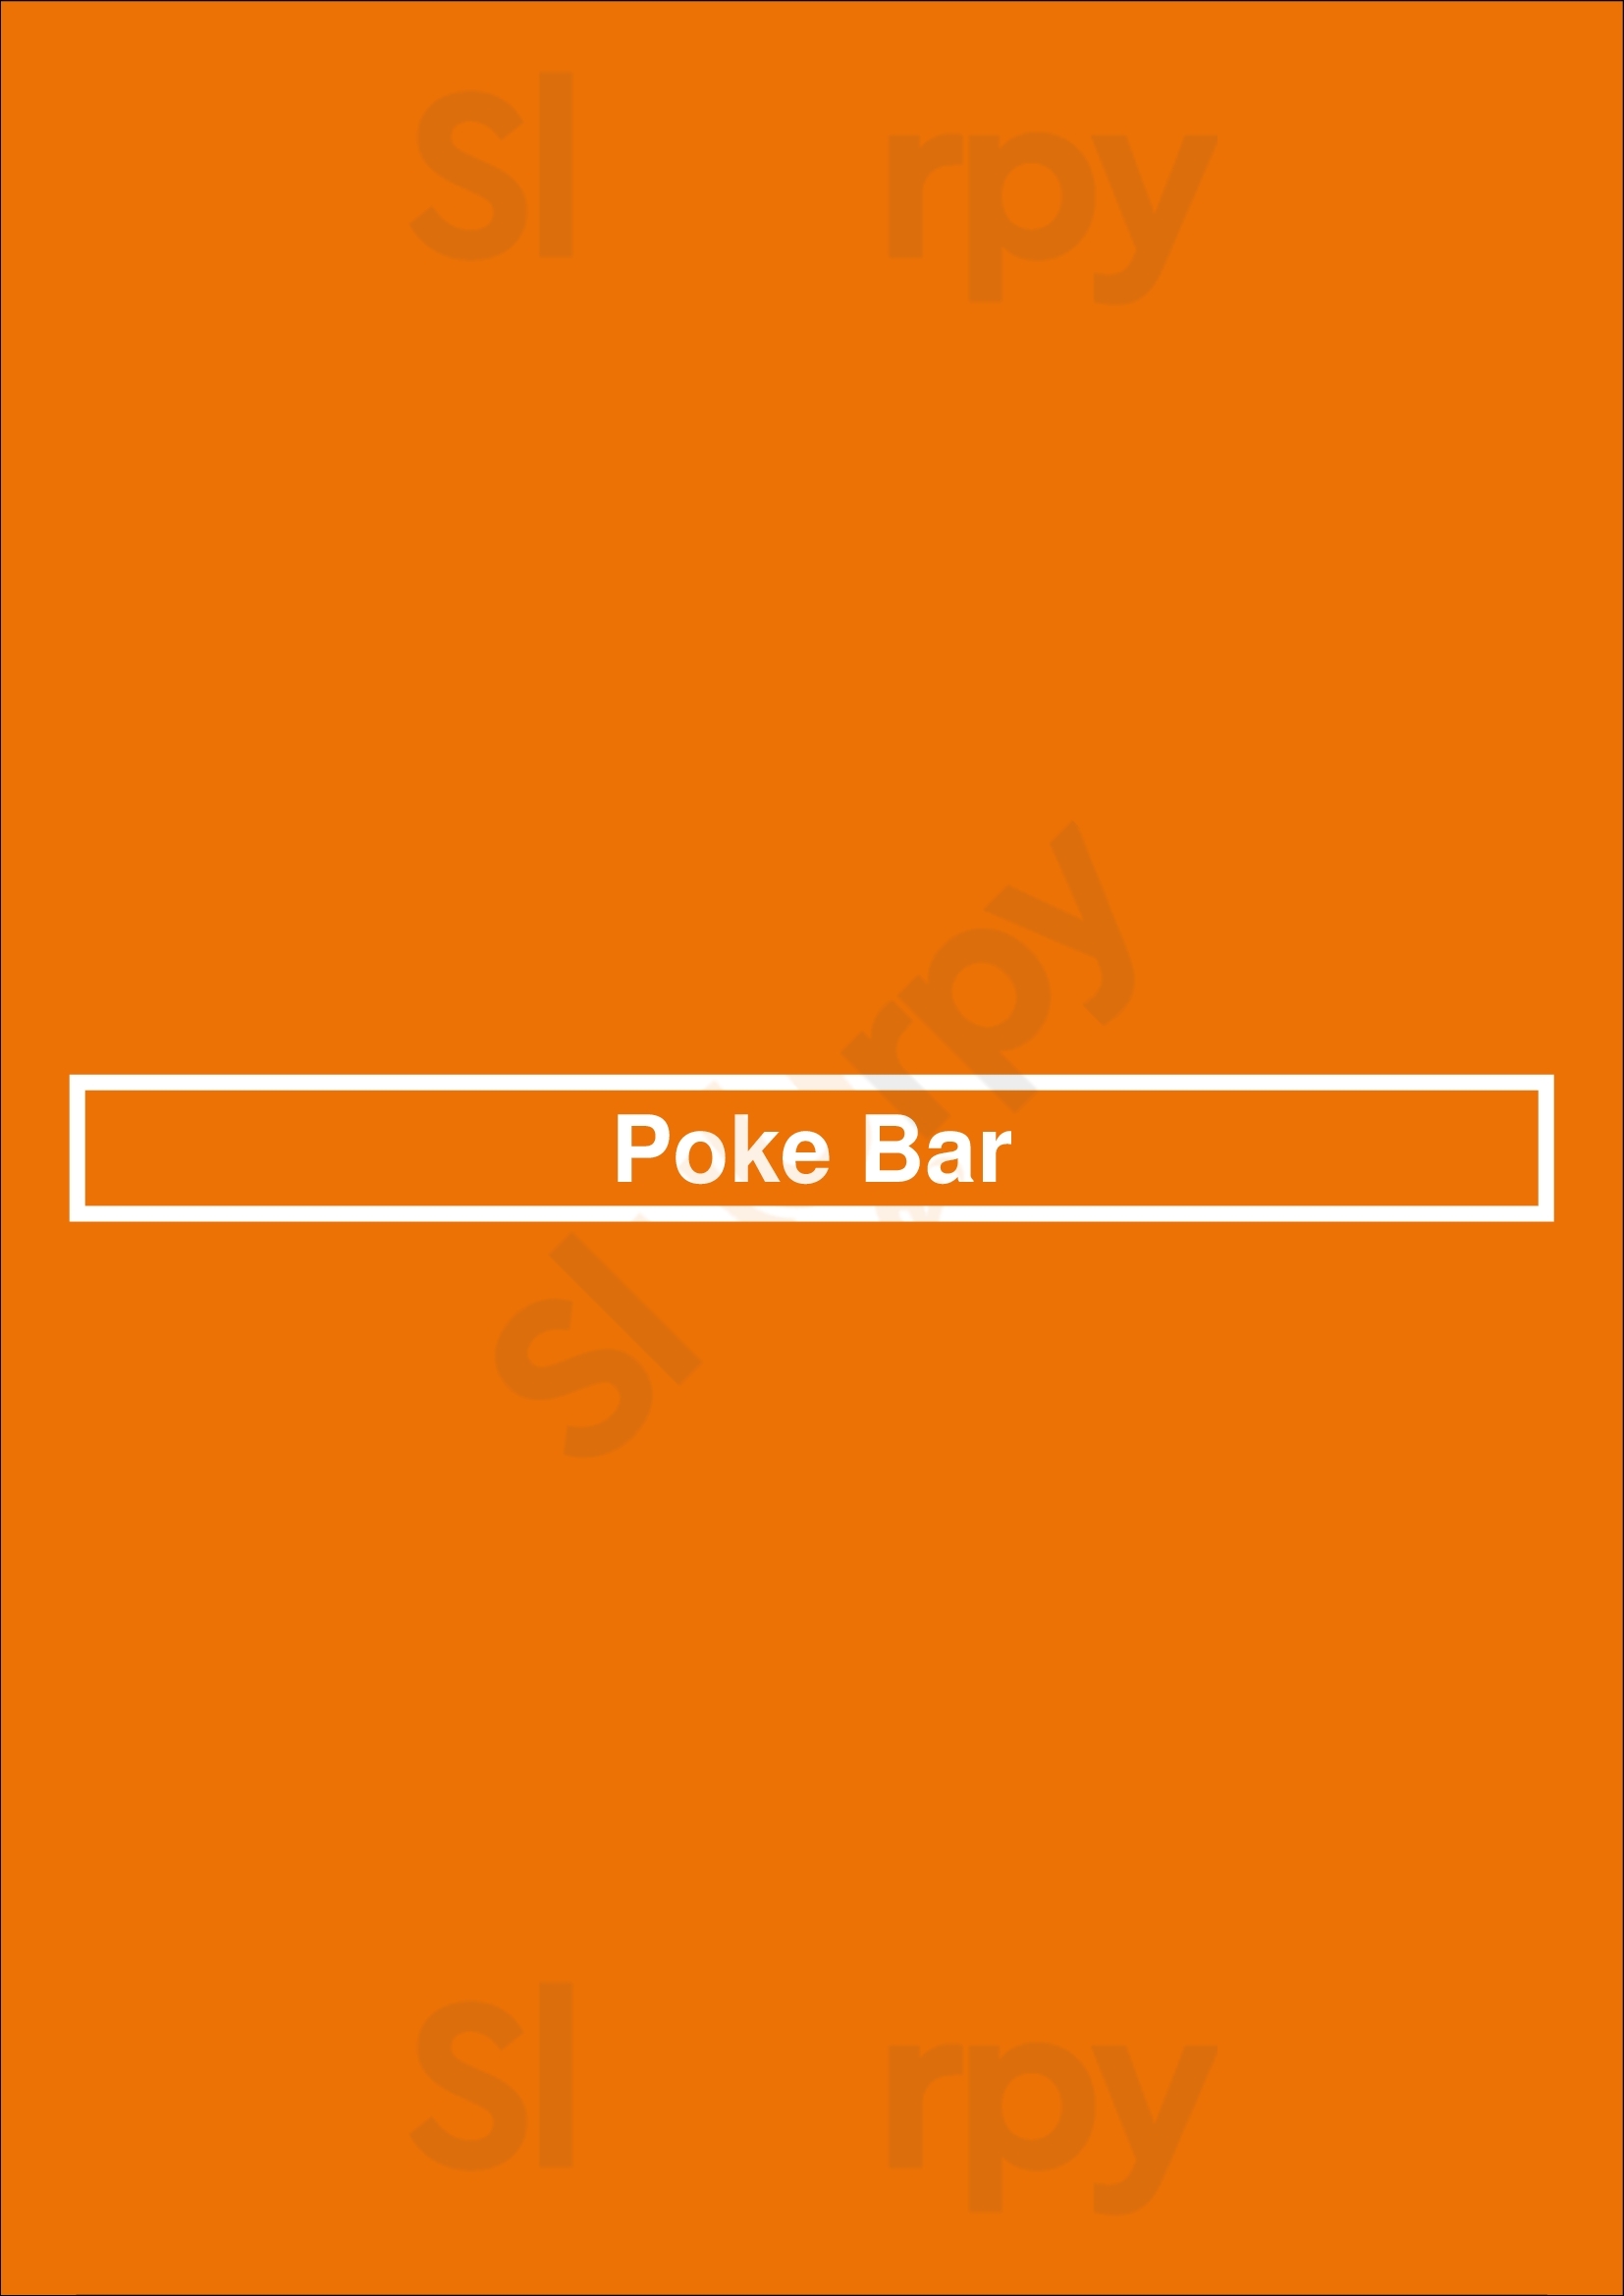 Poke Bar Los Angeles Menu - 1